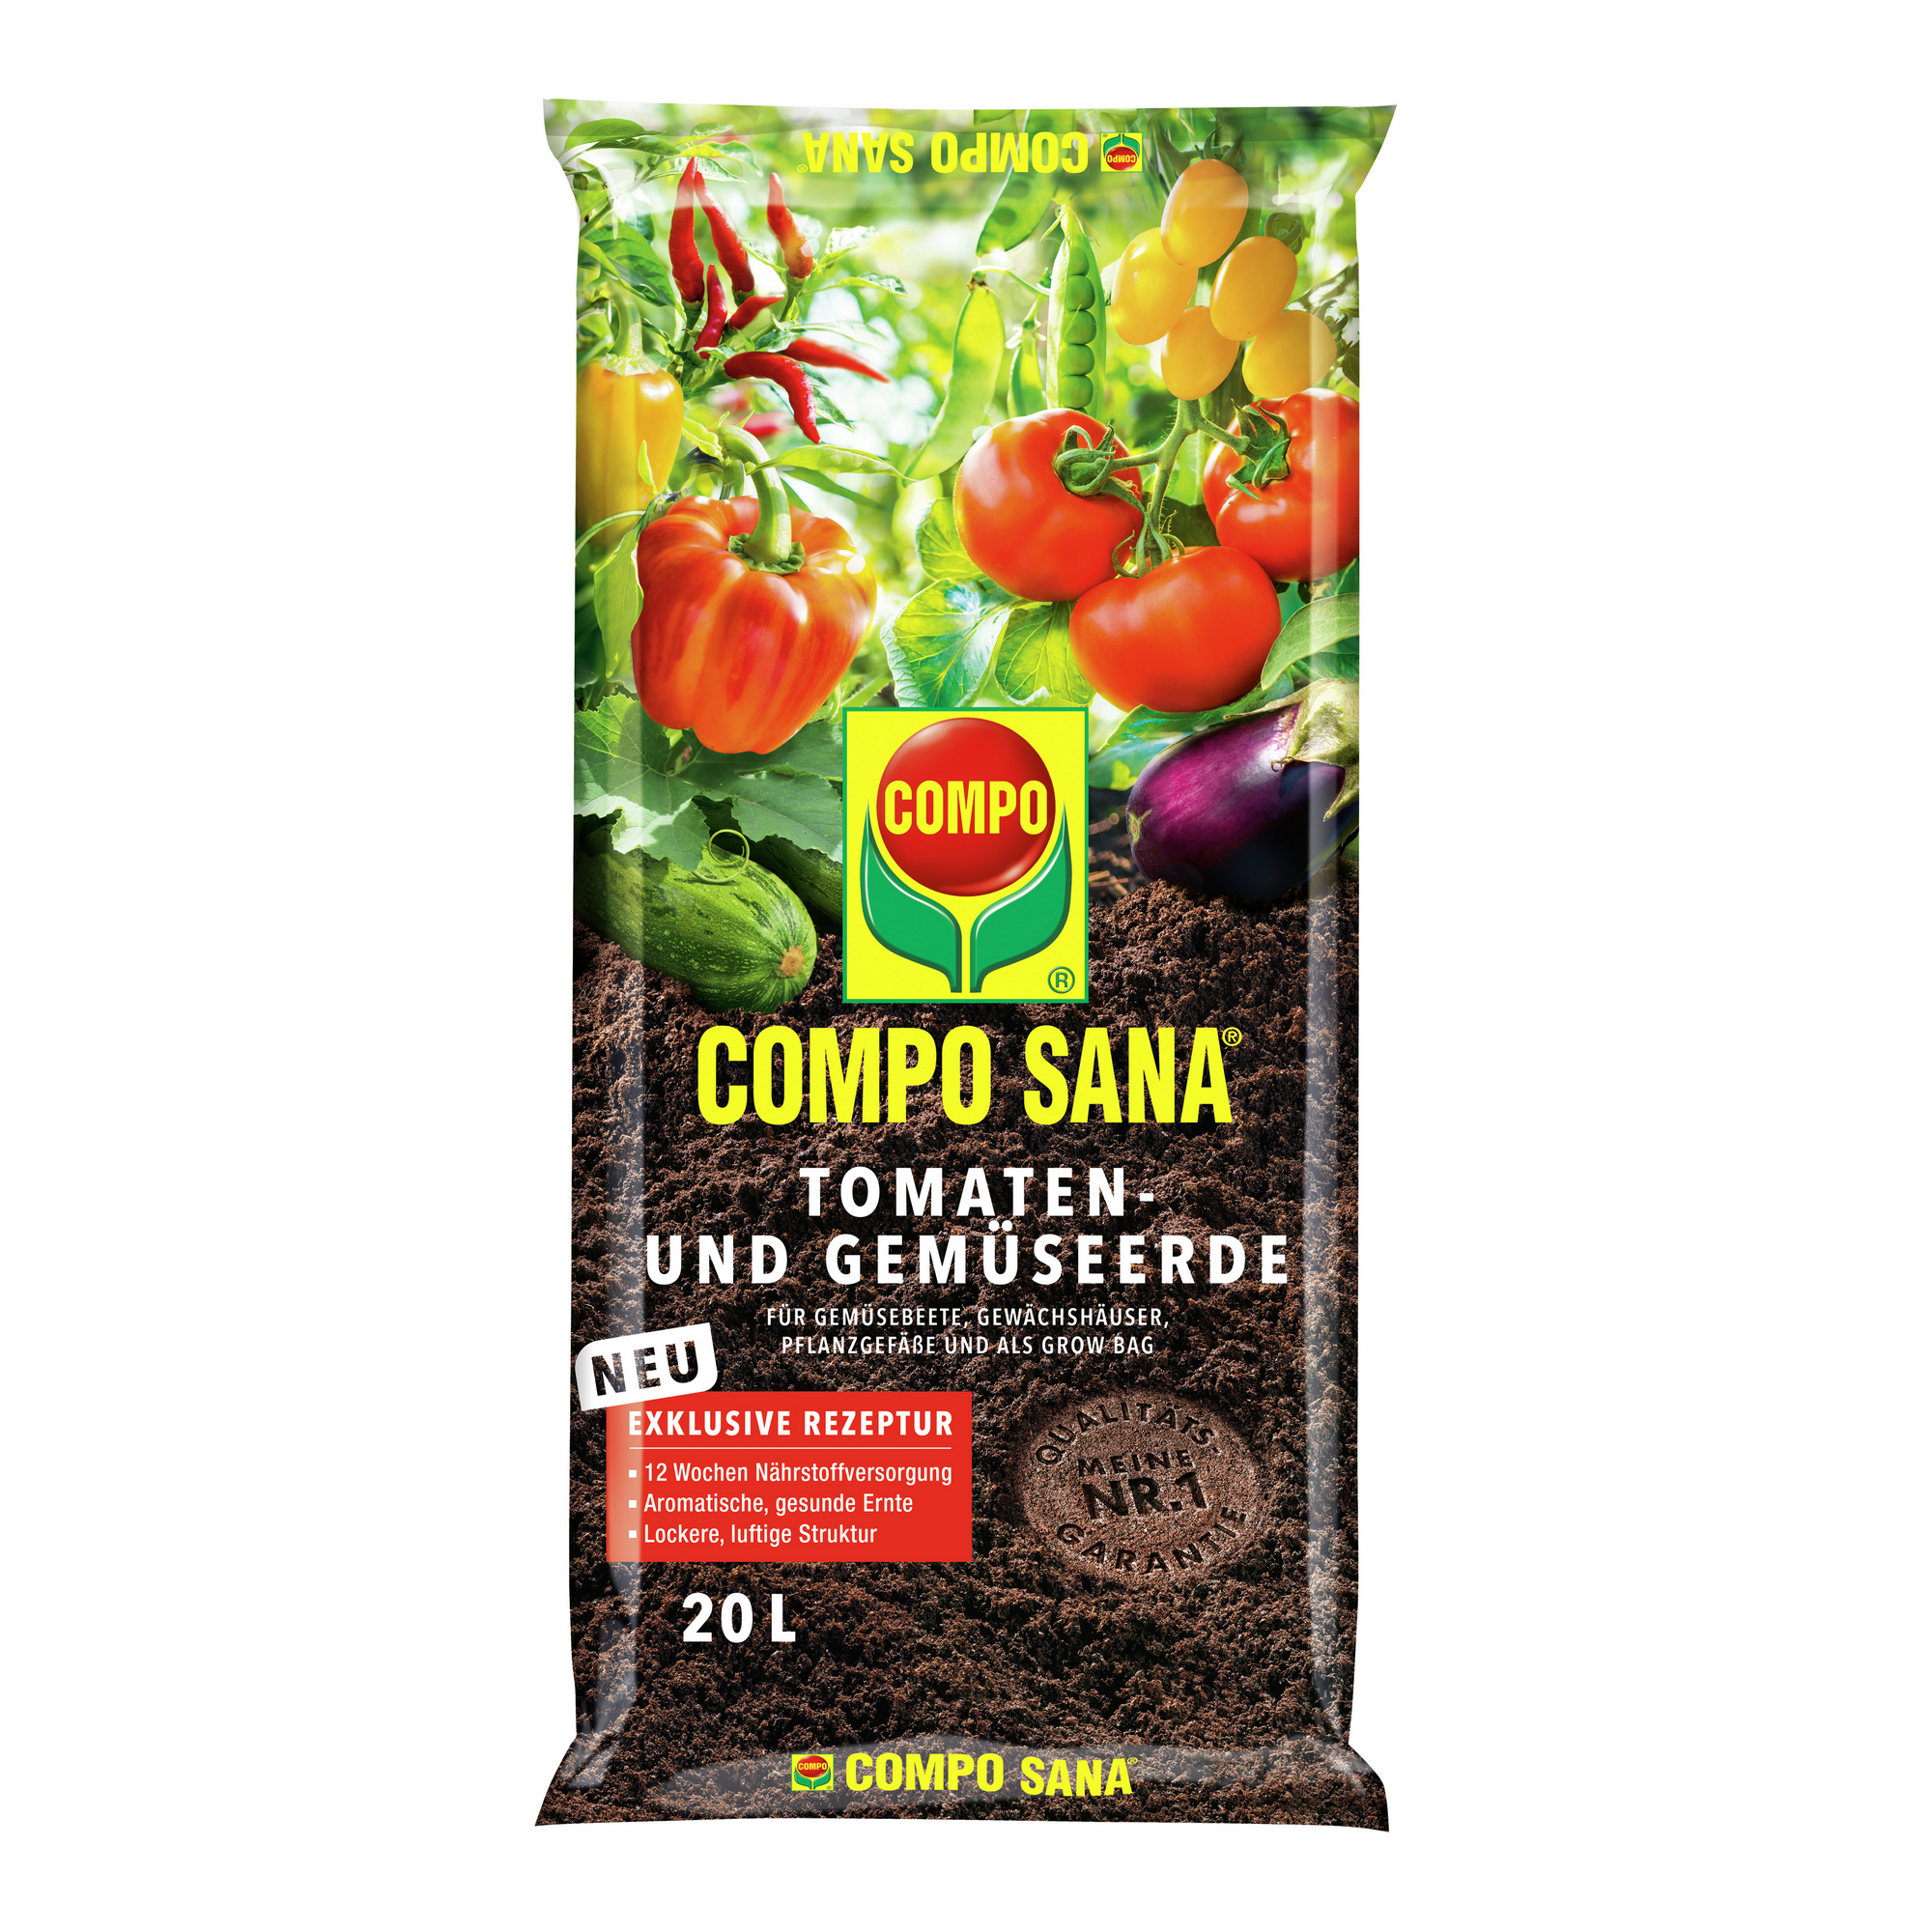 Compo Sana® Tomaten- und Gemüseerde 20 l + product picture